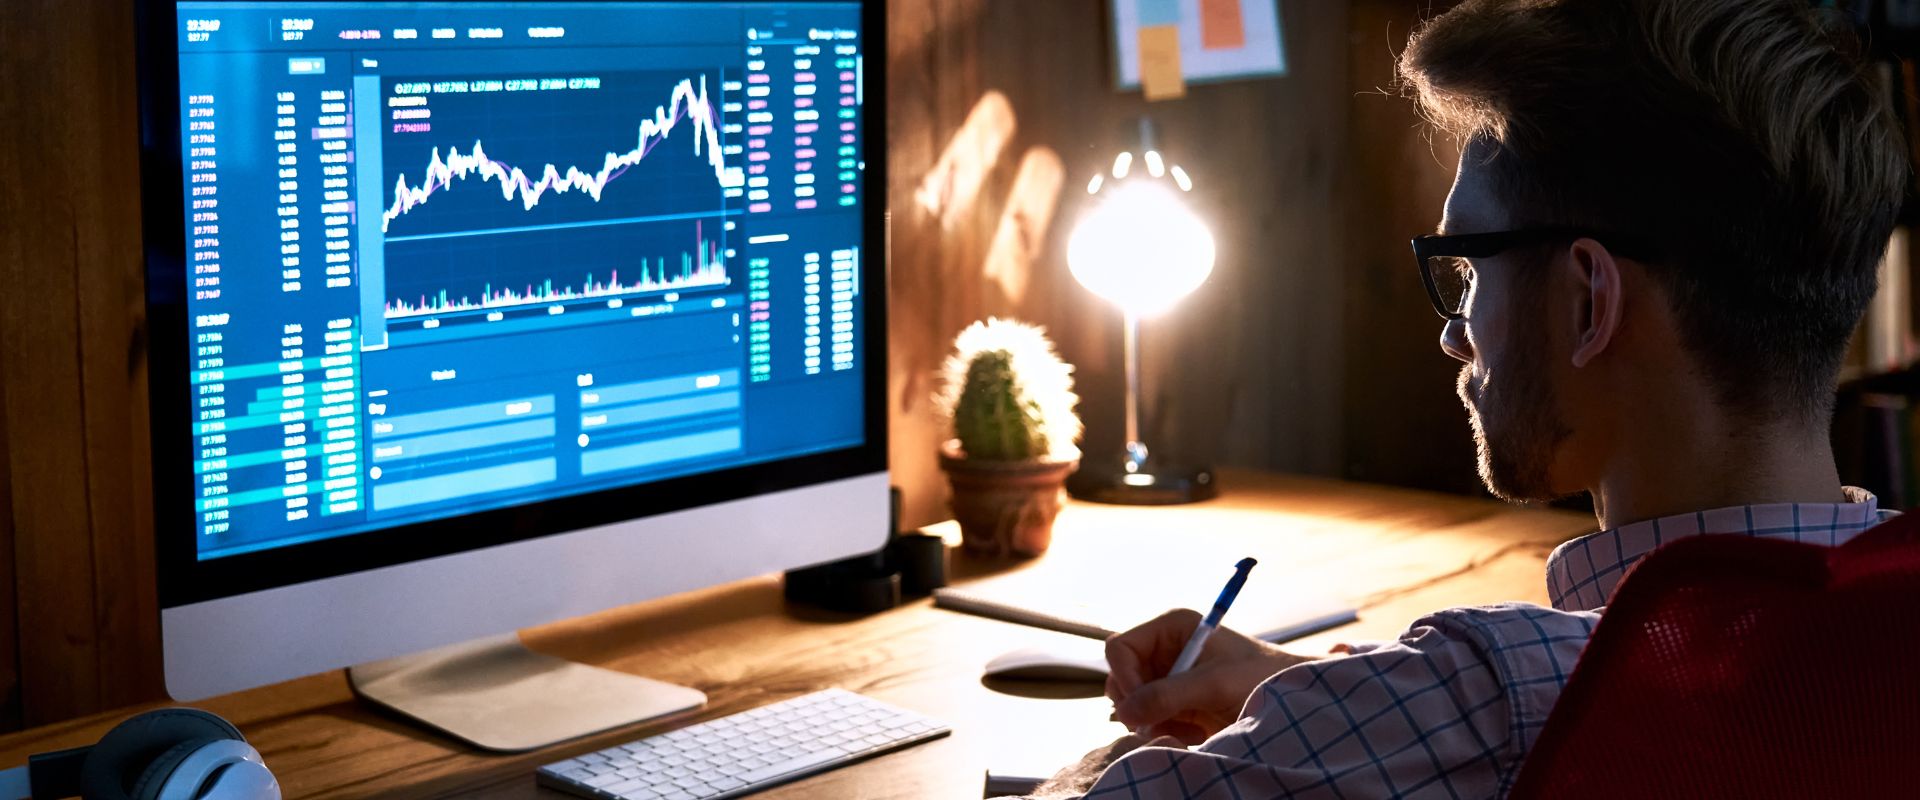 stock market analysts analyzing trend data